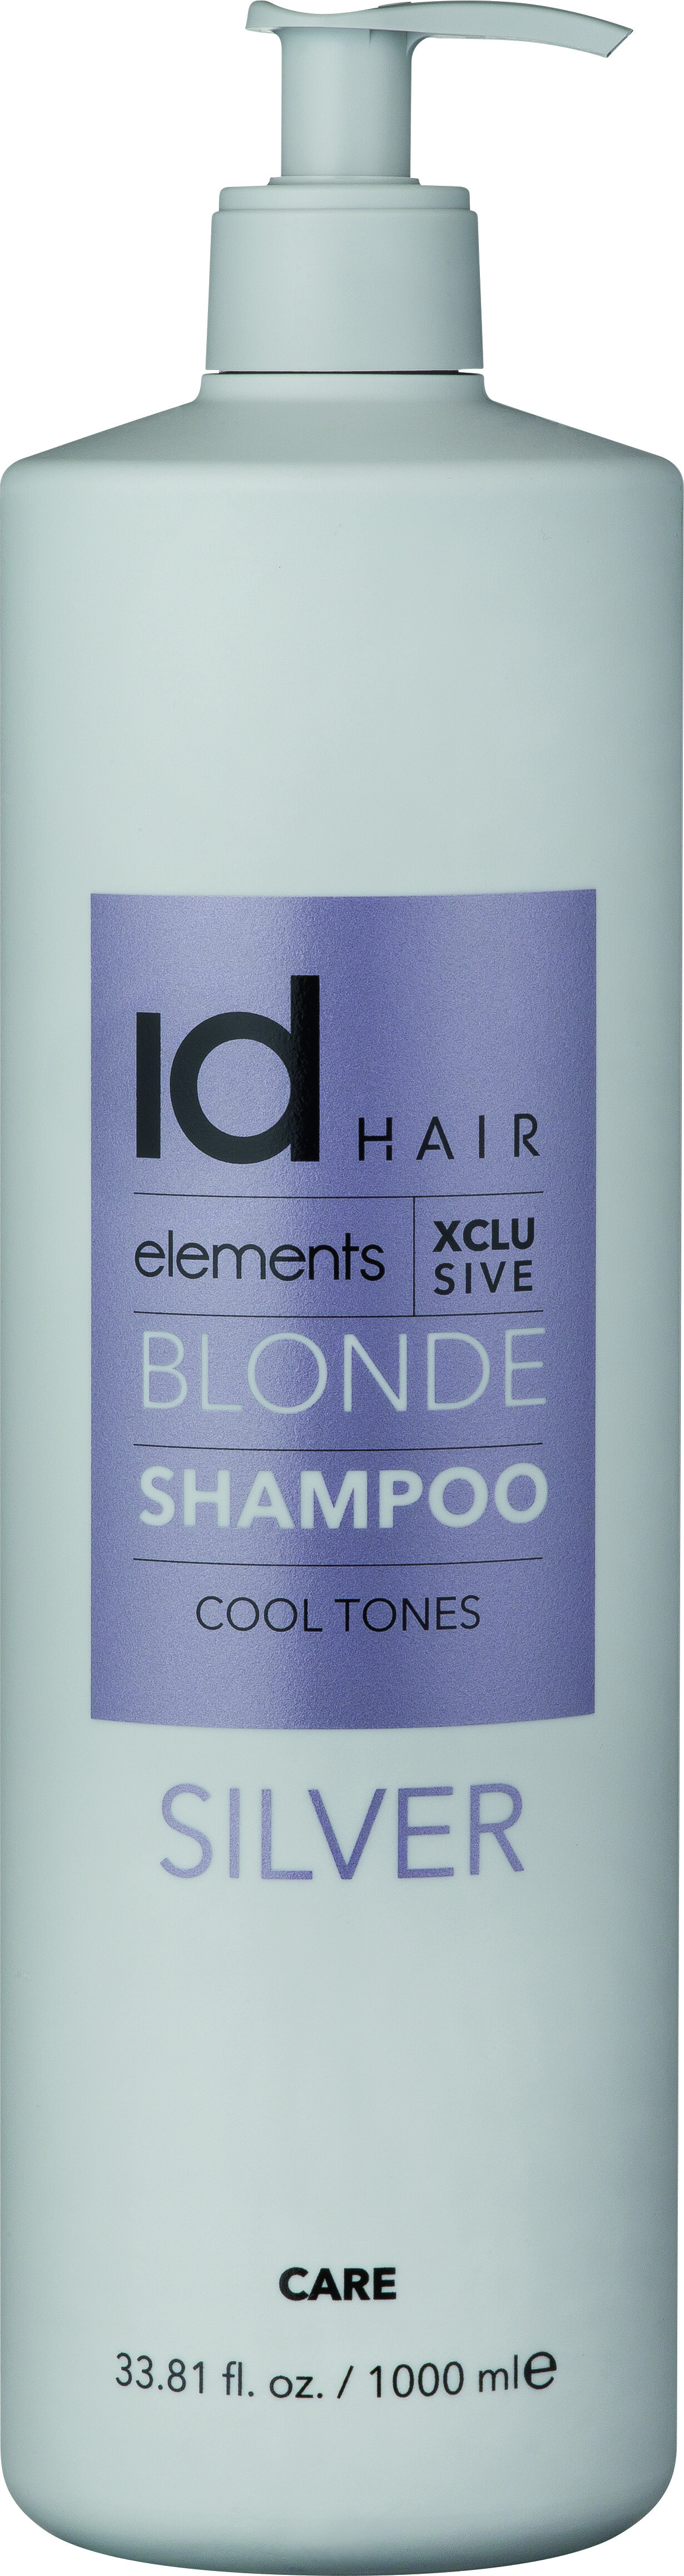 Billede af Id Hair - Elements Xclusive Blonde Silver Shampoo 1000 Ml hos Gucca.dk